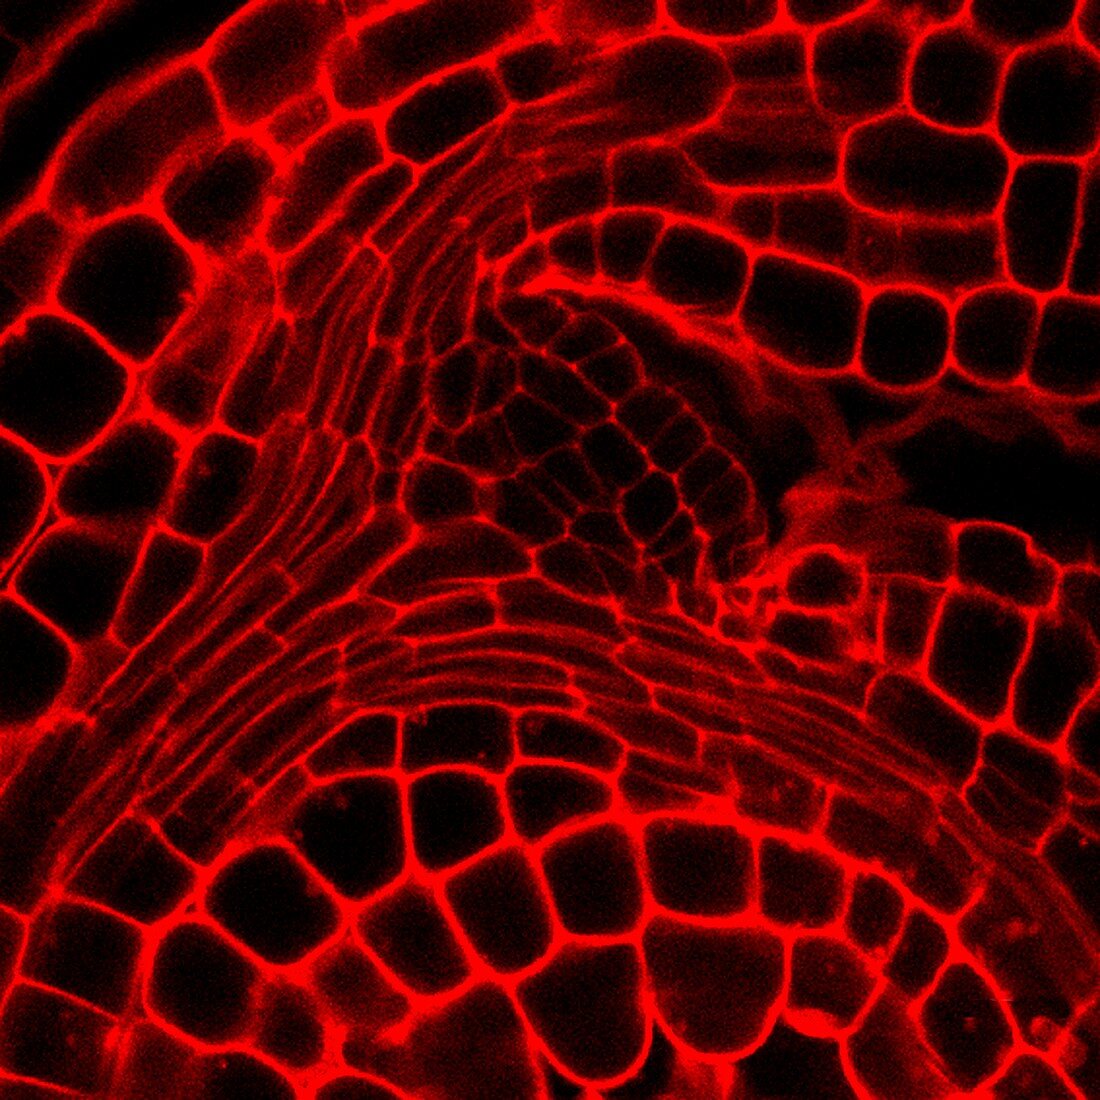 Plant embryo,light micrograph